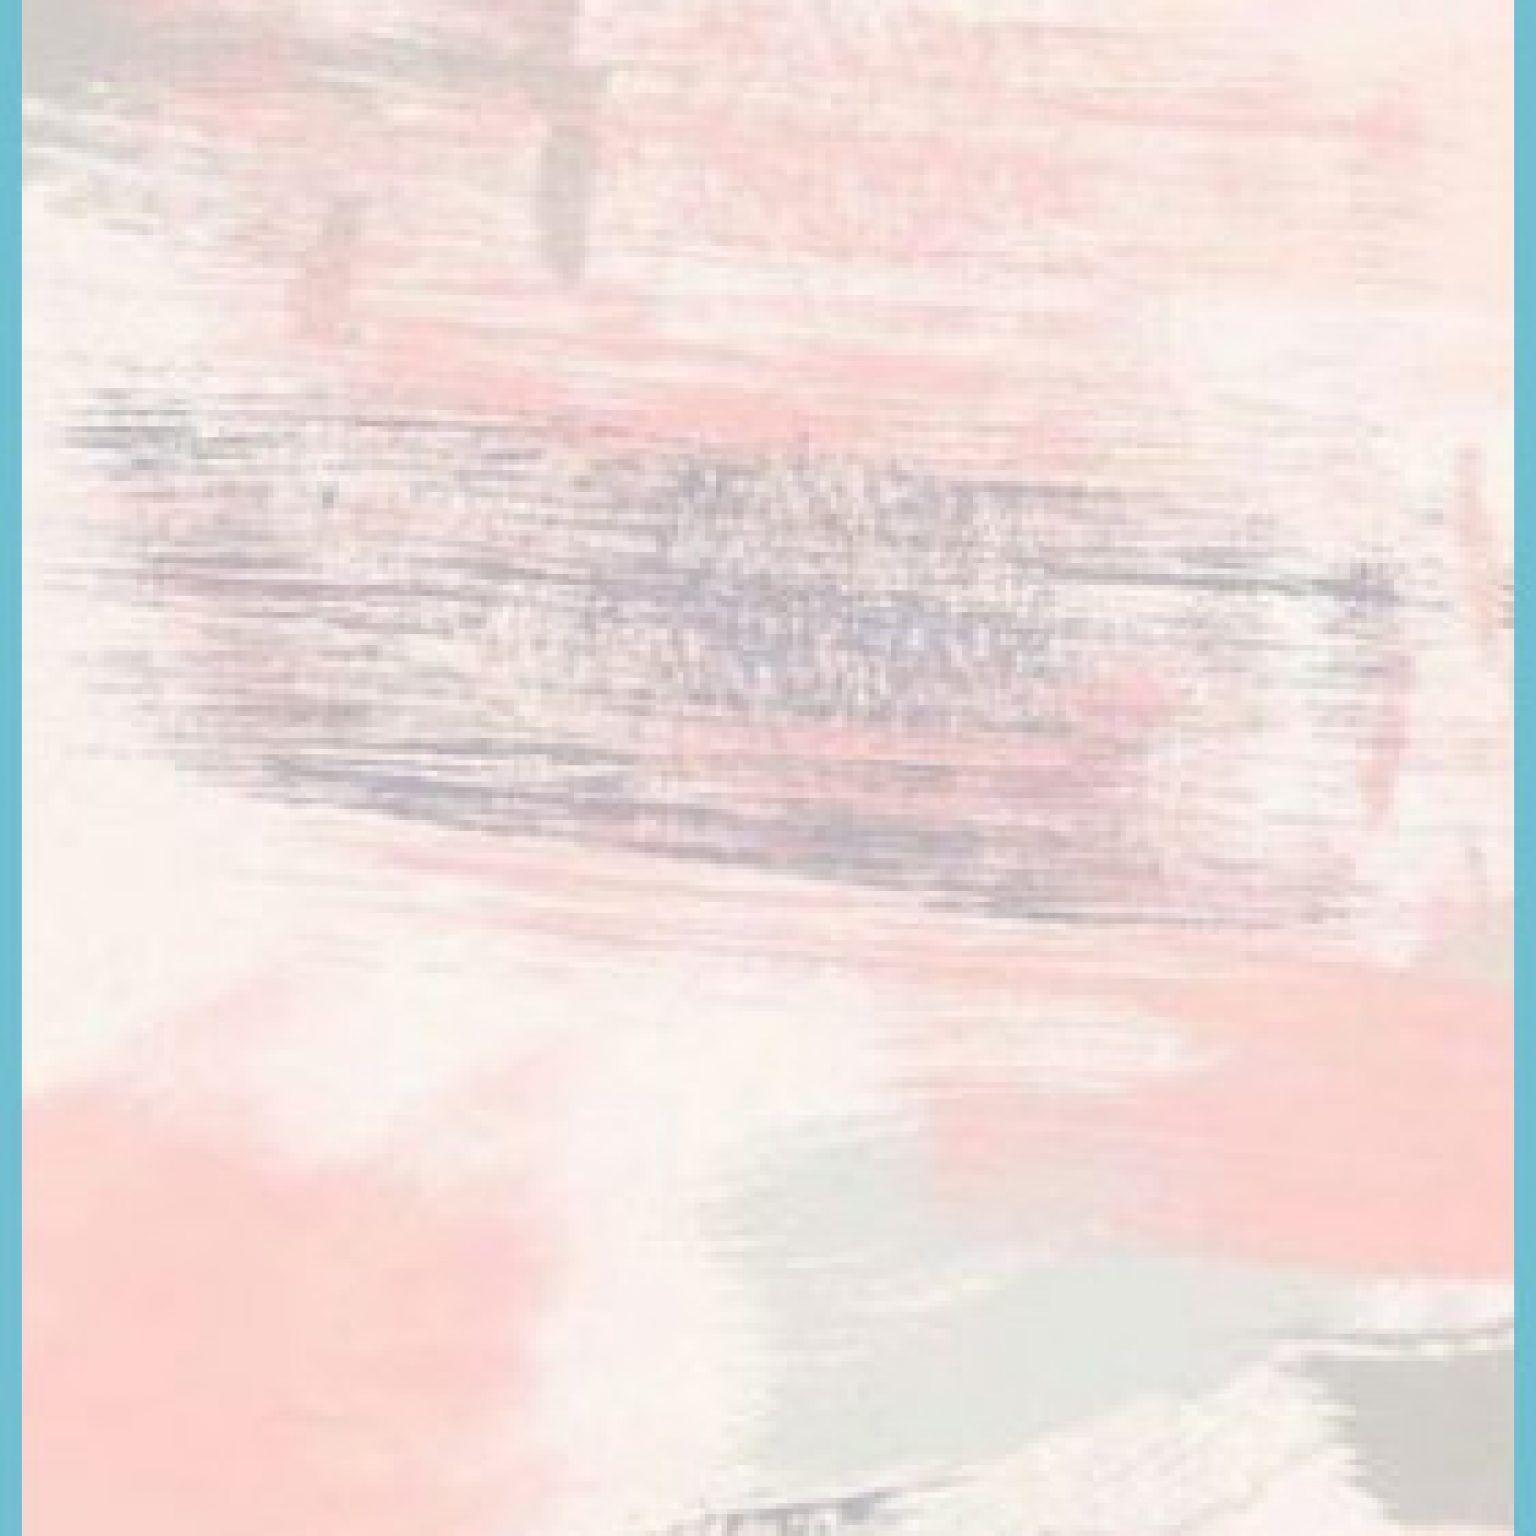 1536x1536 Hình nền Tumblr iPhone Papel De Parede Đơn giản iPhone - Nền Tumblr Pastel